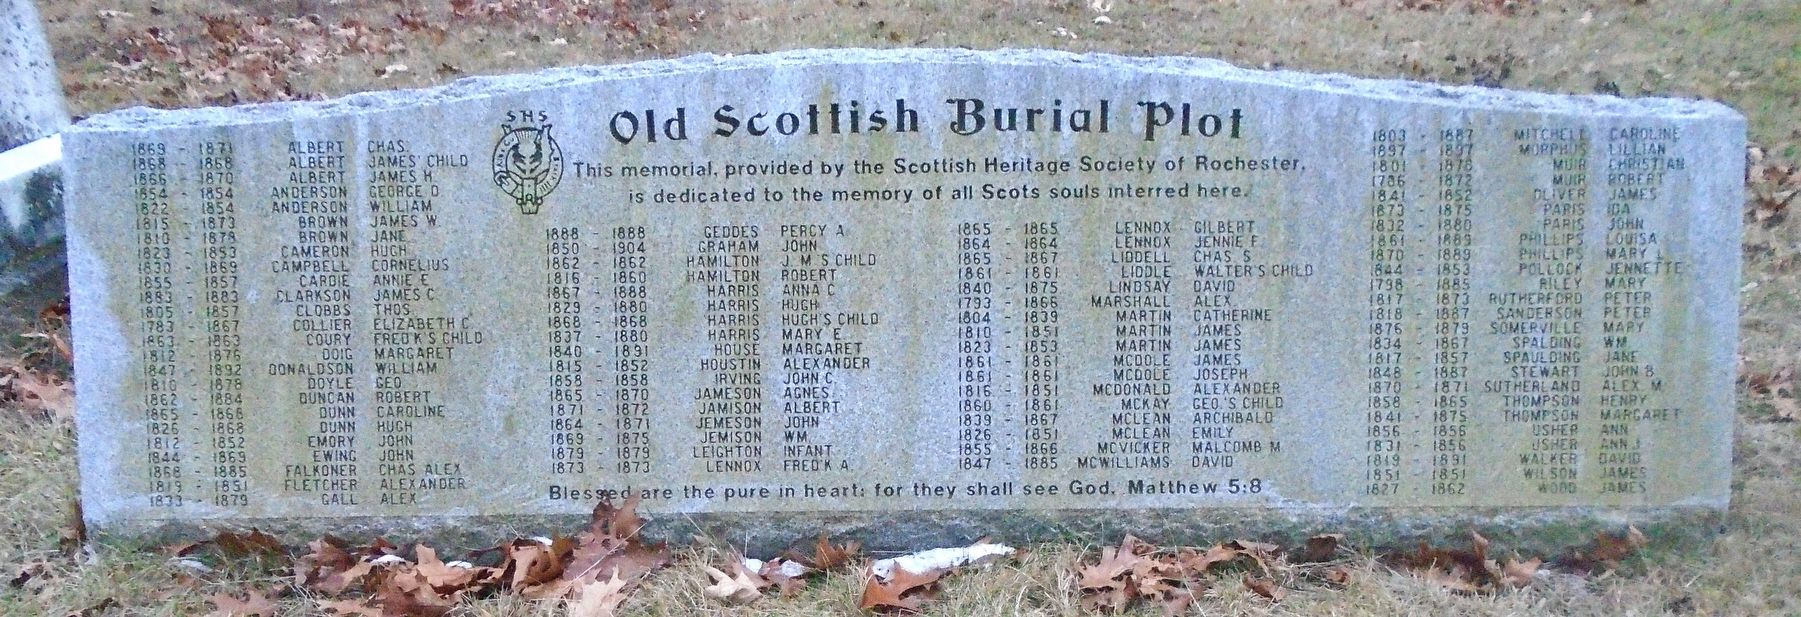 Old Scottish Burial Plot Marker image. Click for full size.